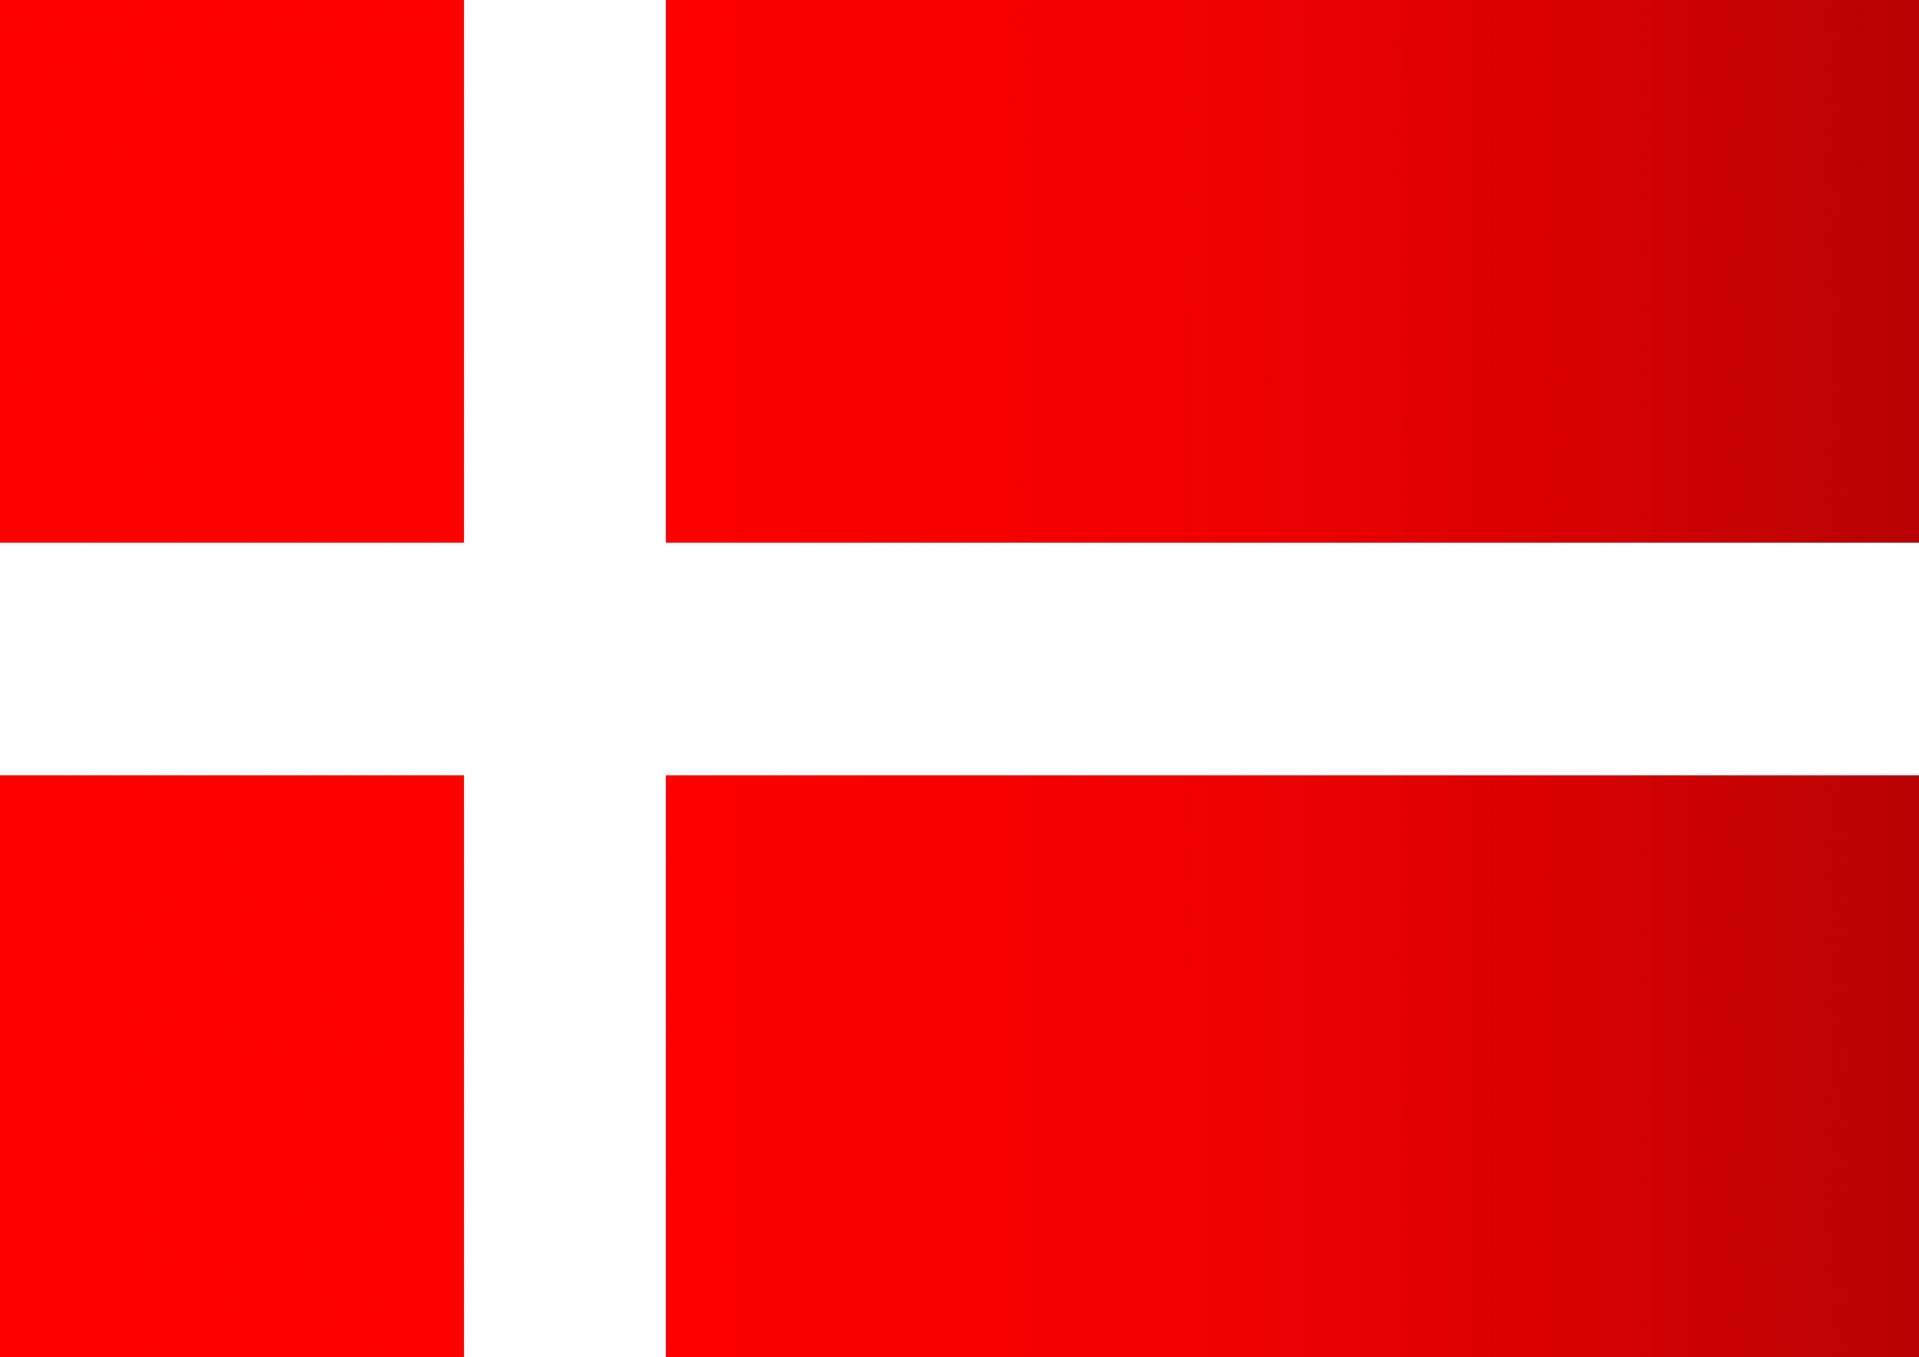 National Flag Of Denmark Themes Idea Free Stock Photo ...